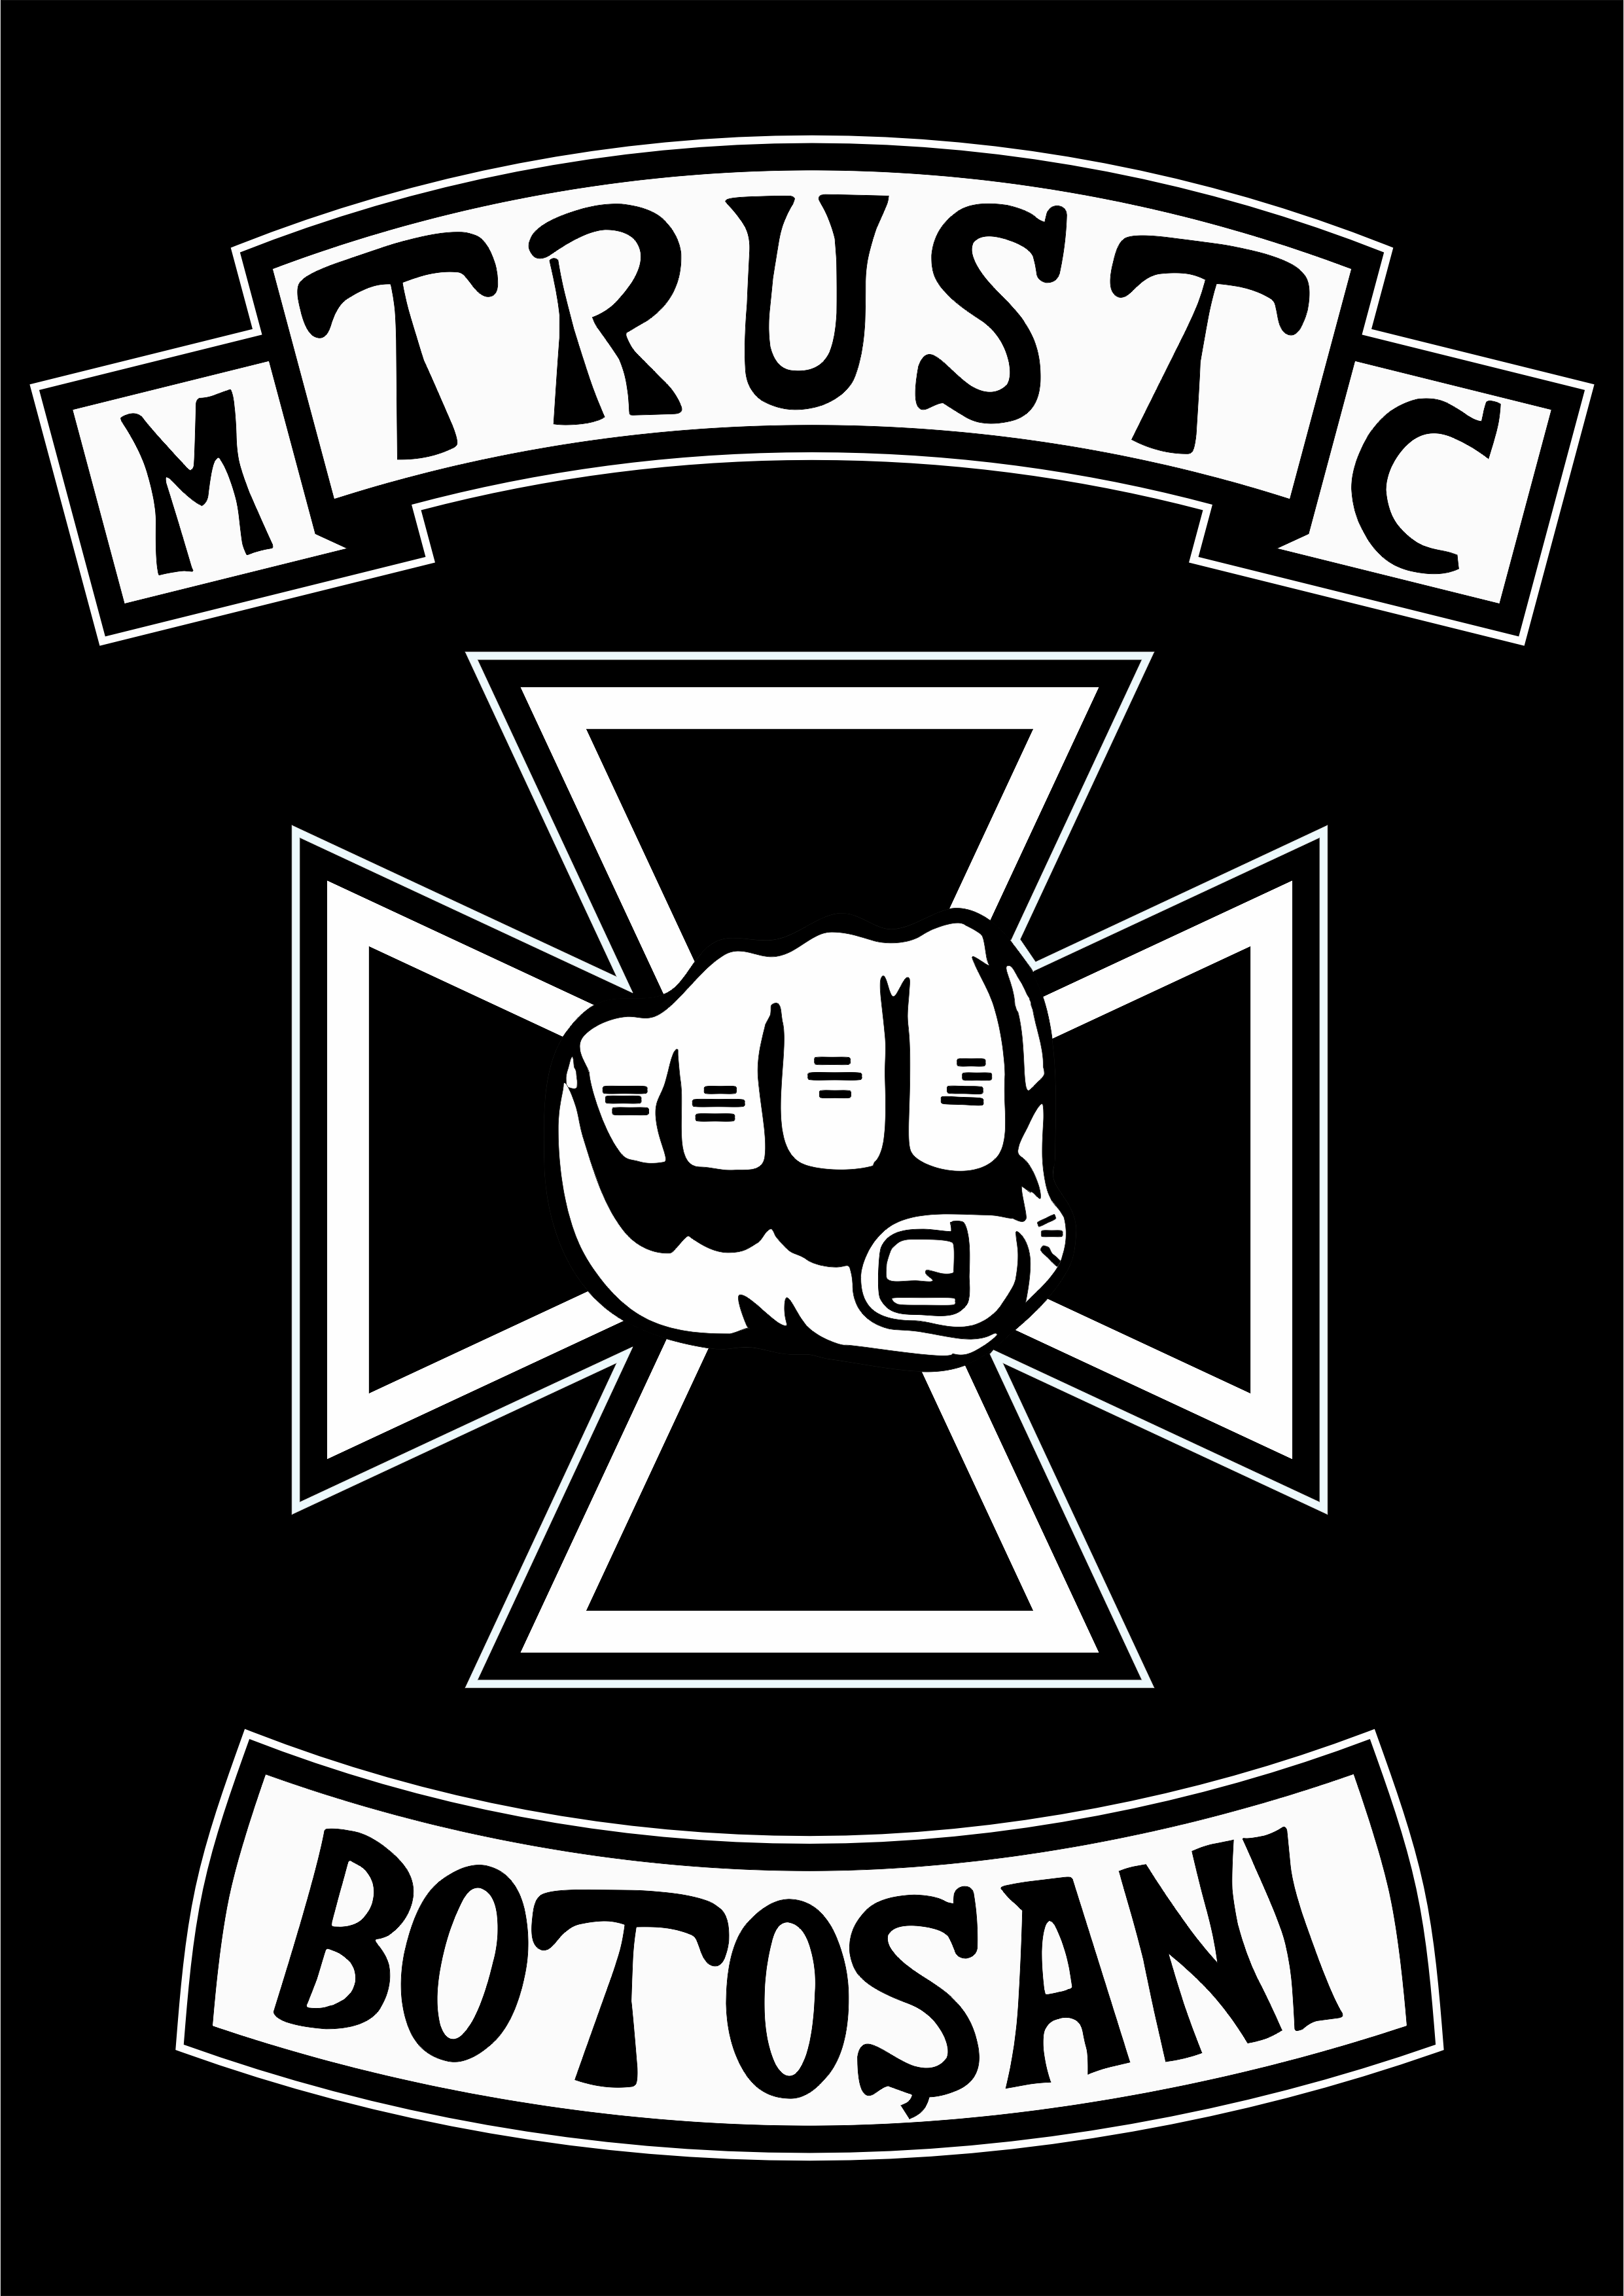 Trust MC Botosani logo